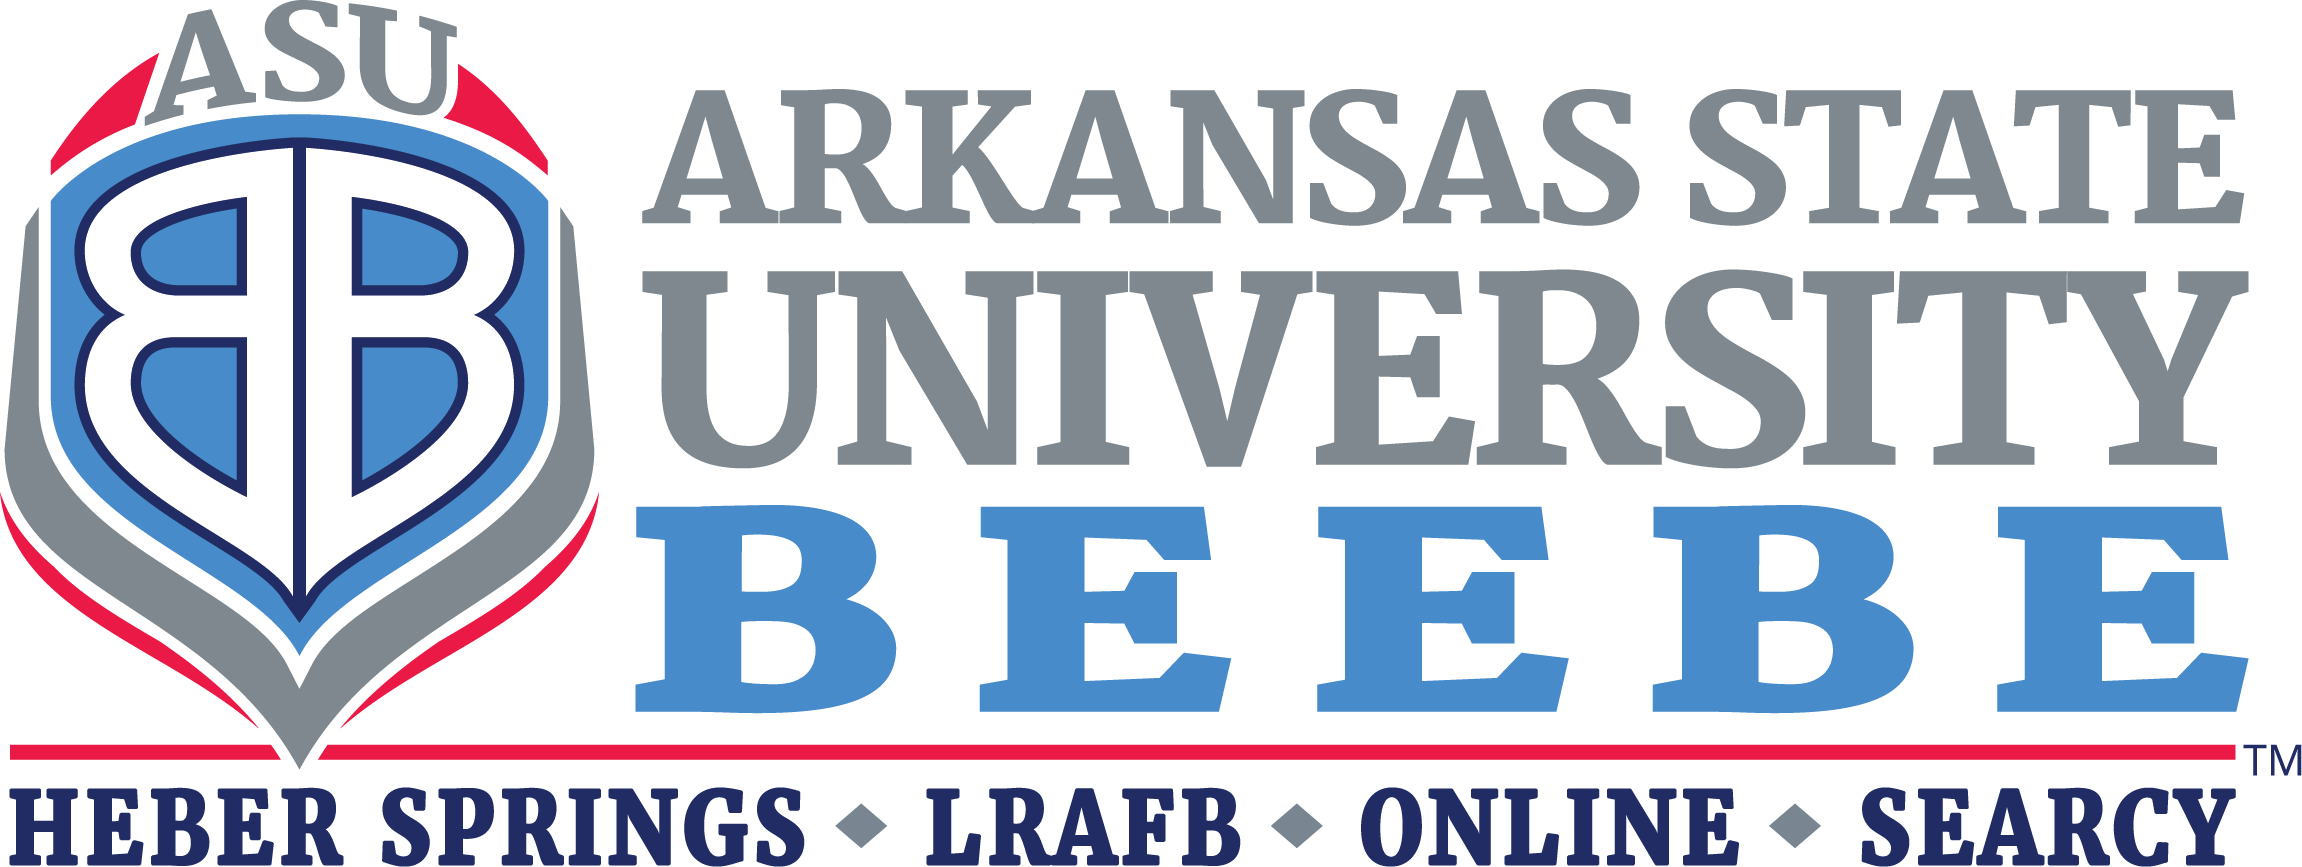 Arkansas State University–Beebe (ASU–Beebe) - Encyclopedia of Arkansas